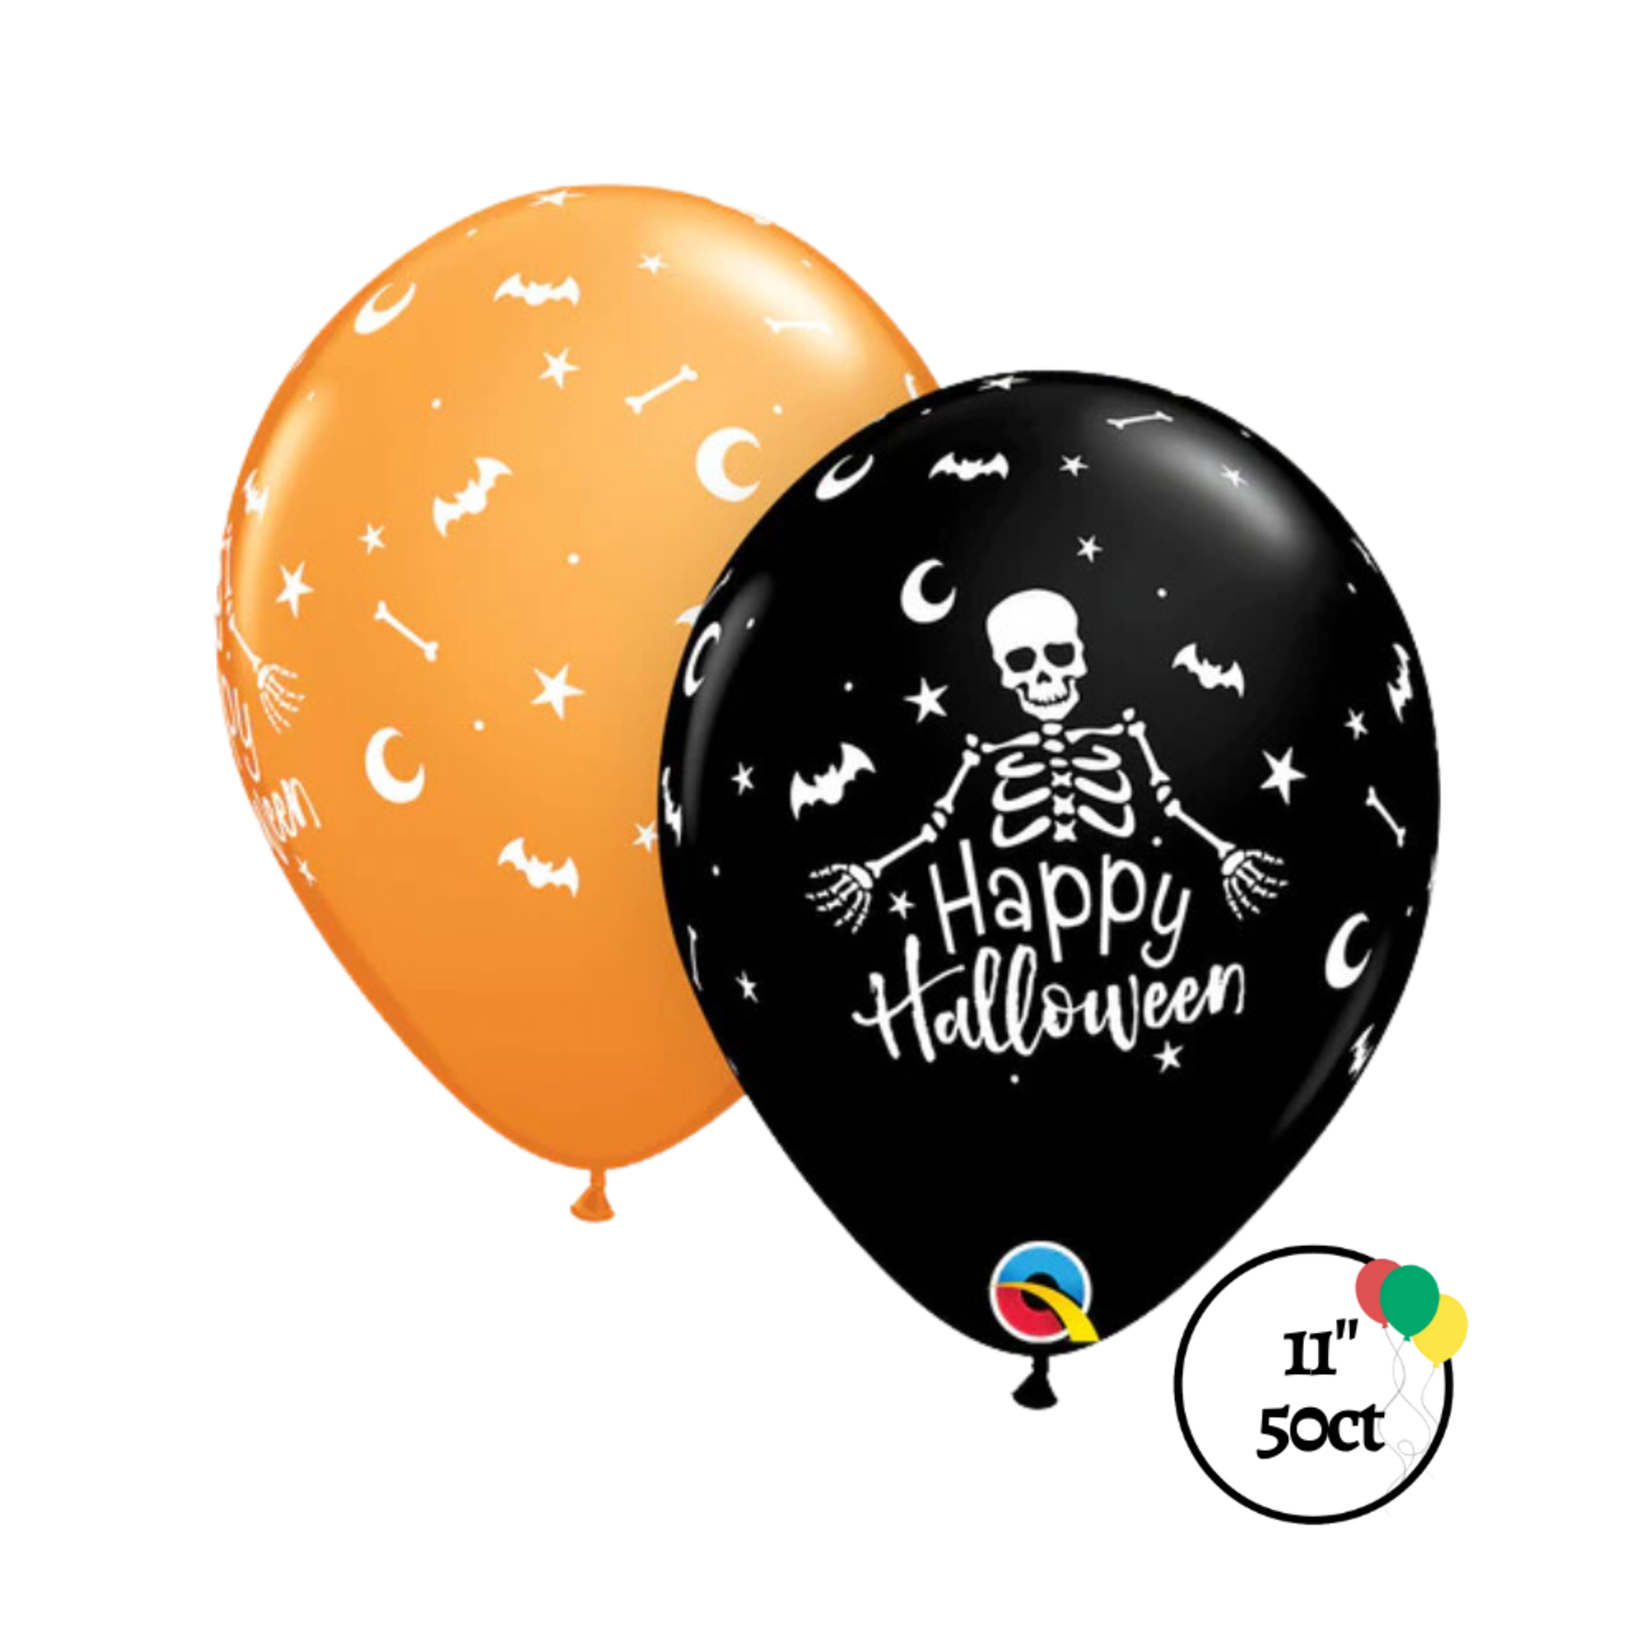 Qualatex Qualatex 11" Happy Halloween Skeleton Balloon 50ct.